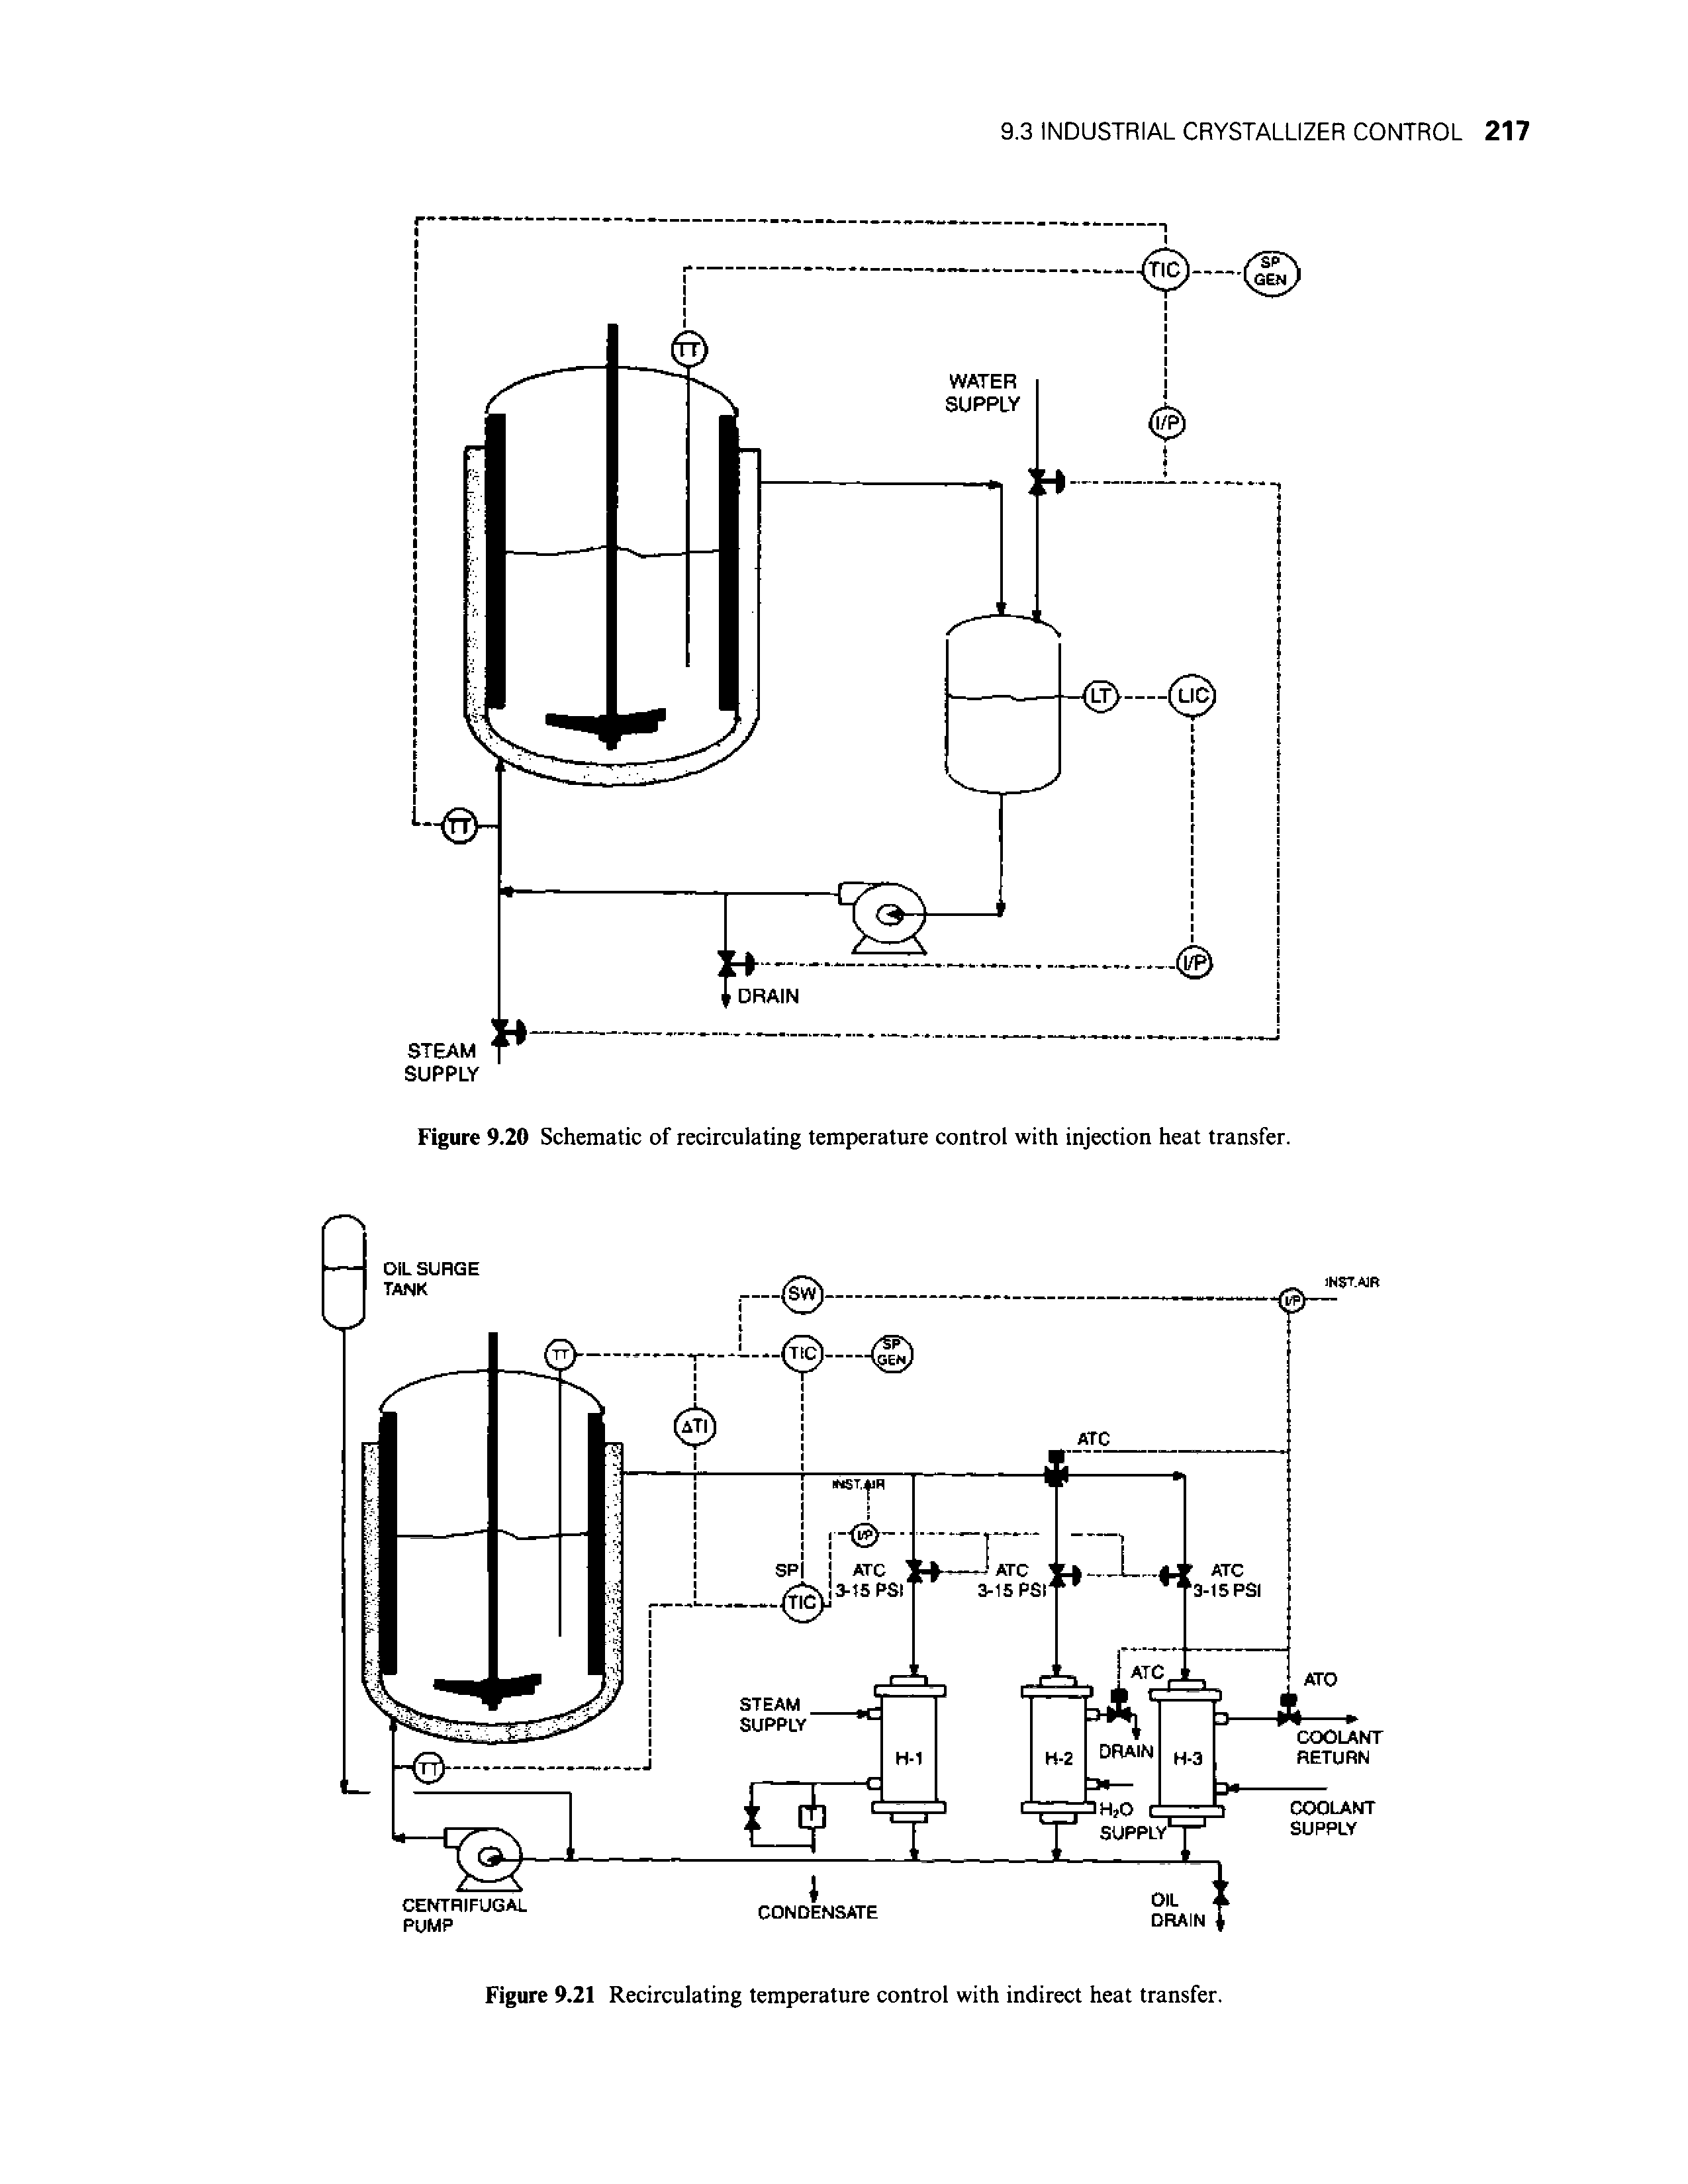 Figure 9.21 Recirculating temperature control with indirect heat transfer.